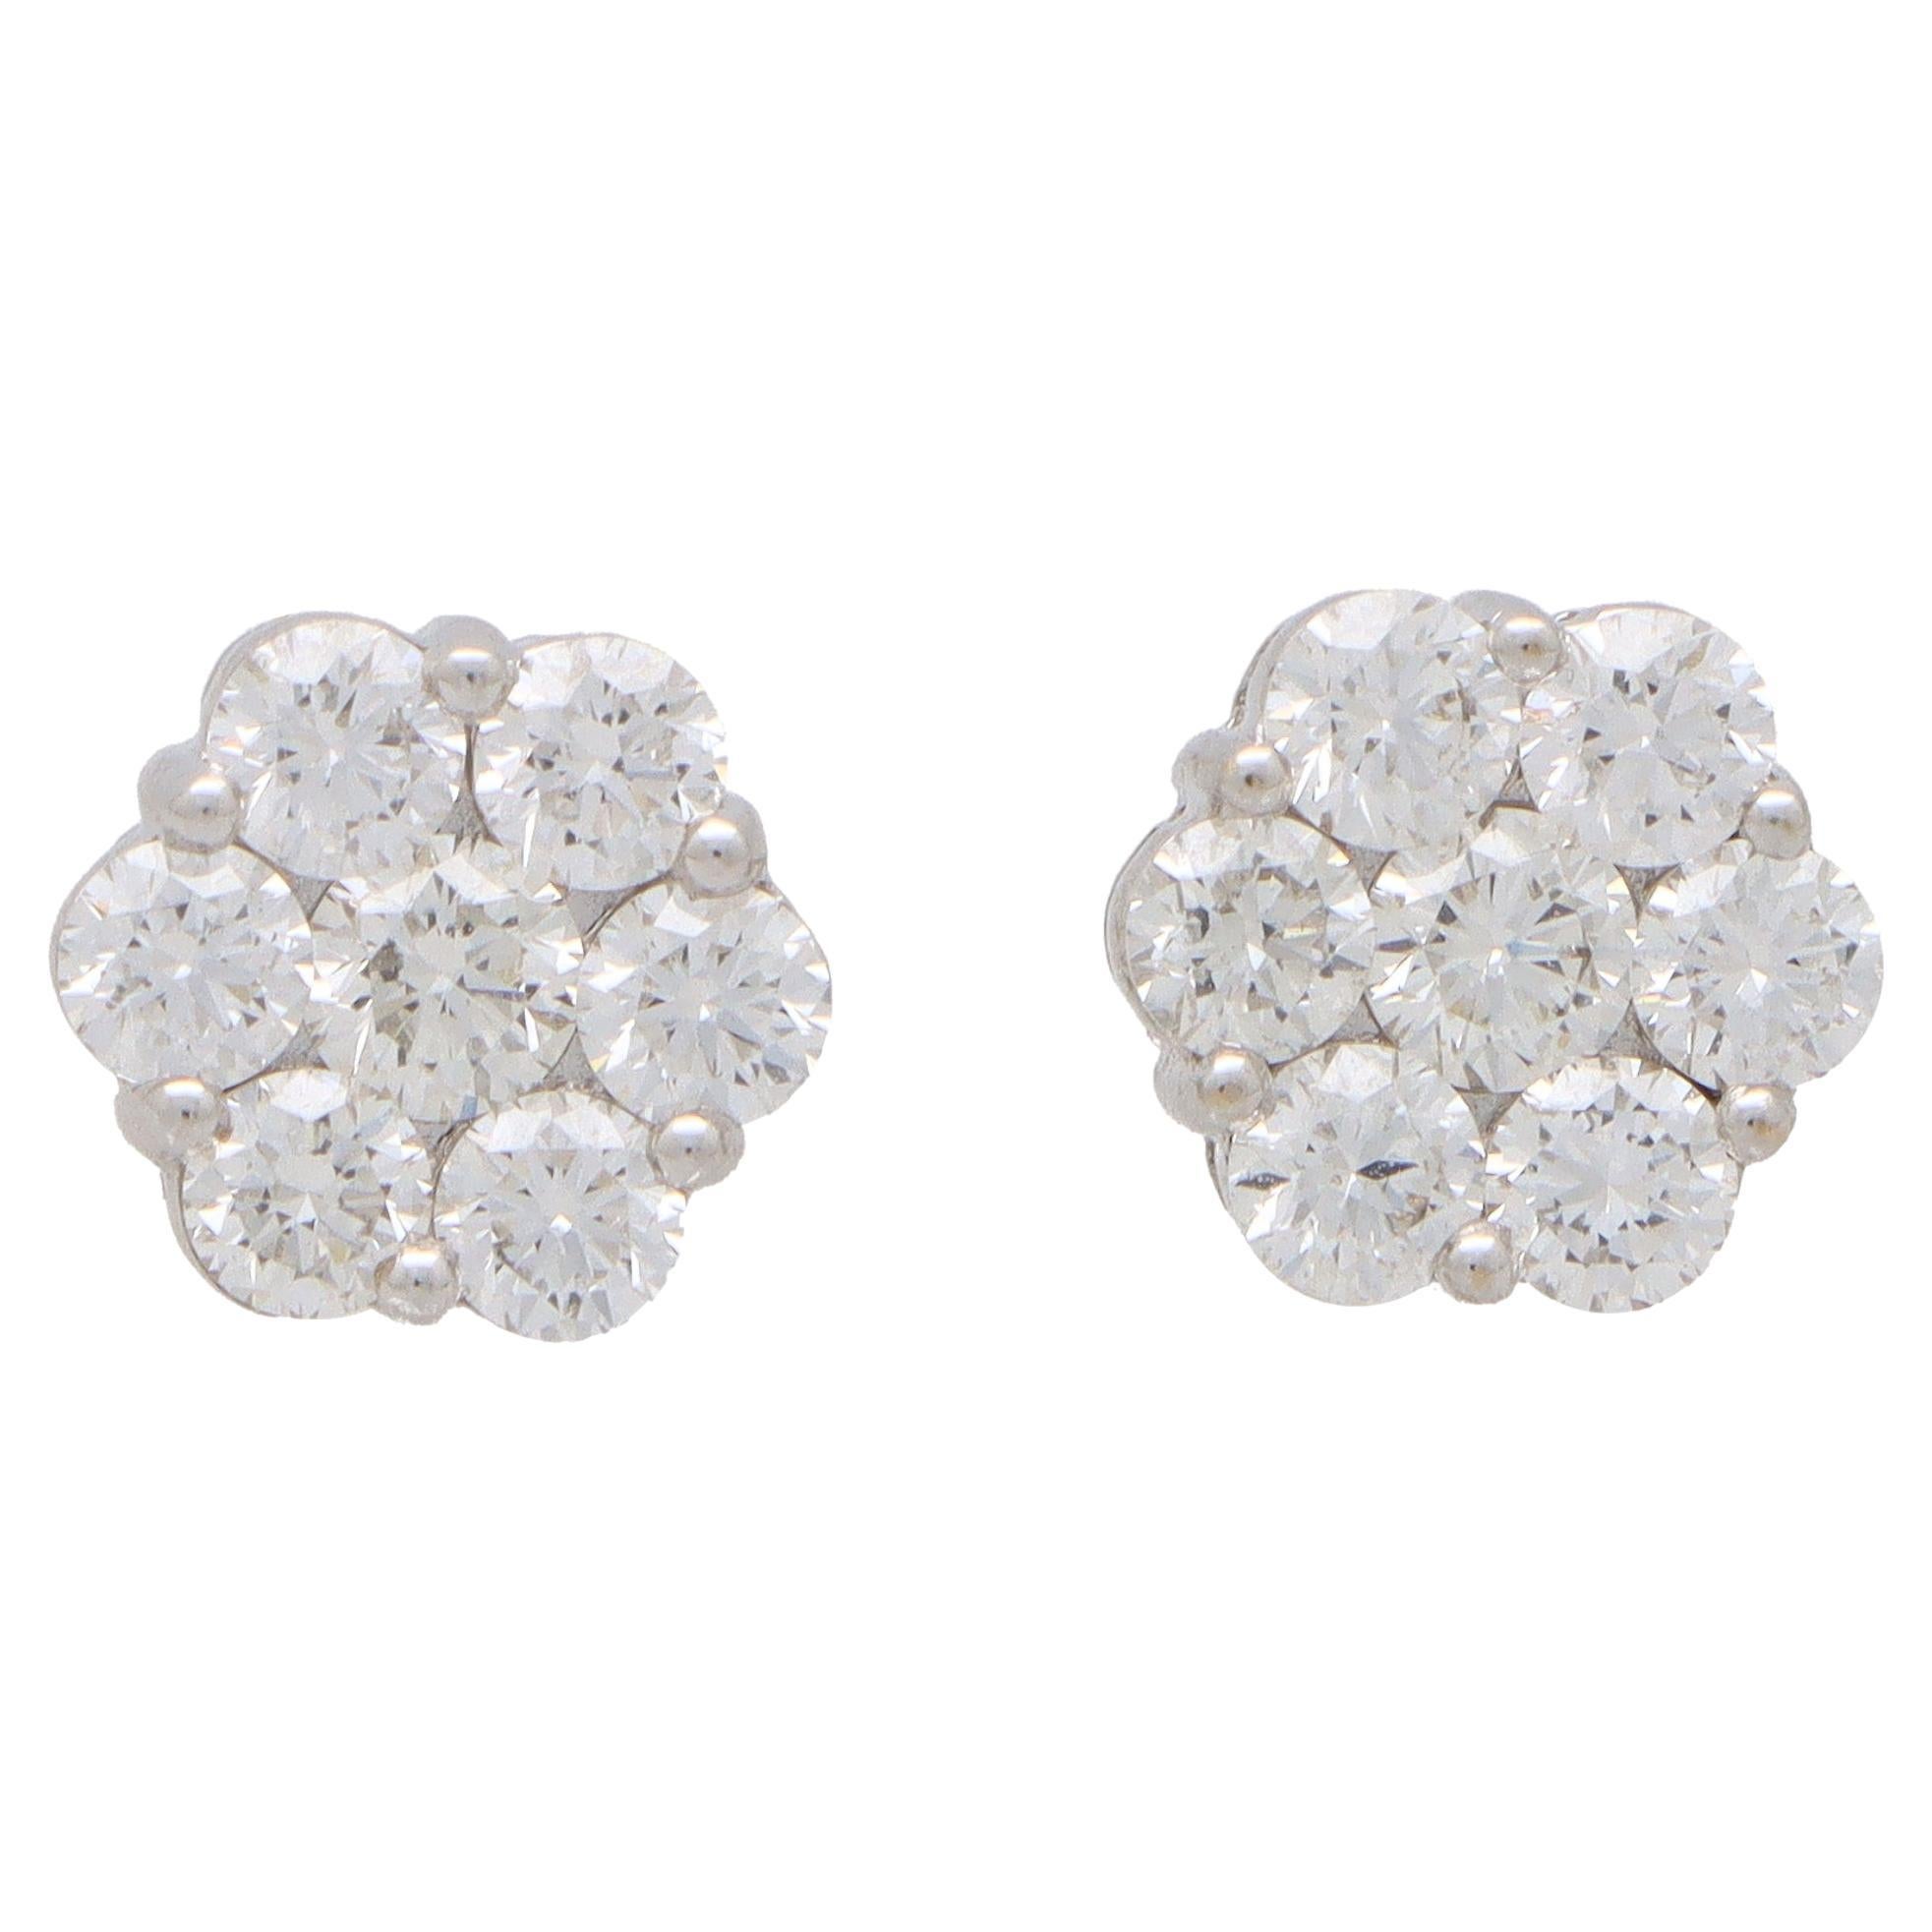 Vintage Floral Diamond Cluster Stud Earrings Set in 18k White Gold